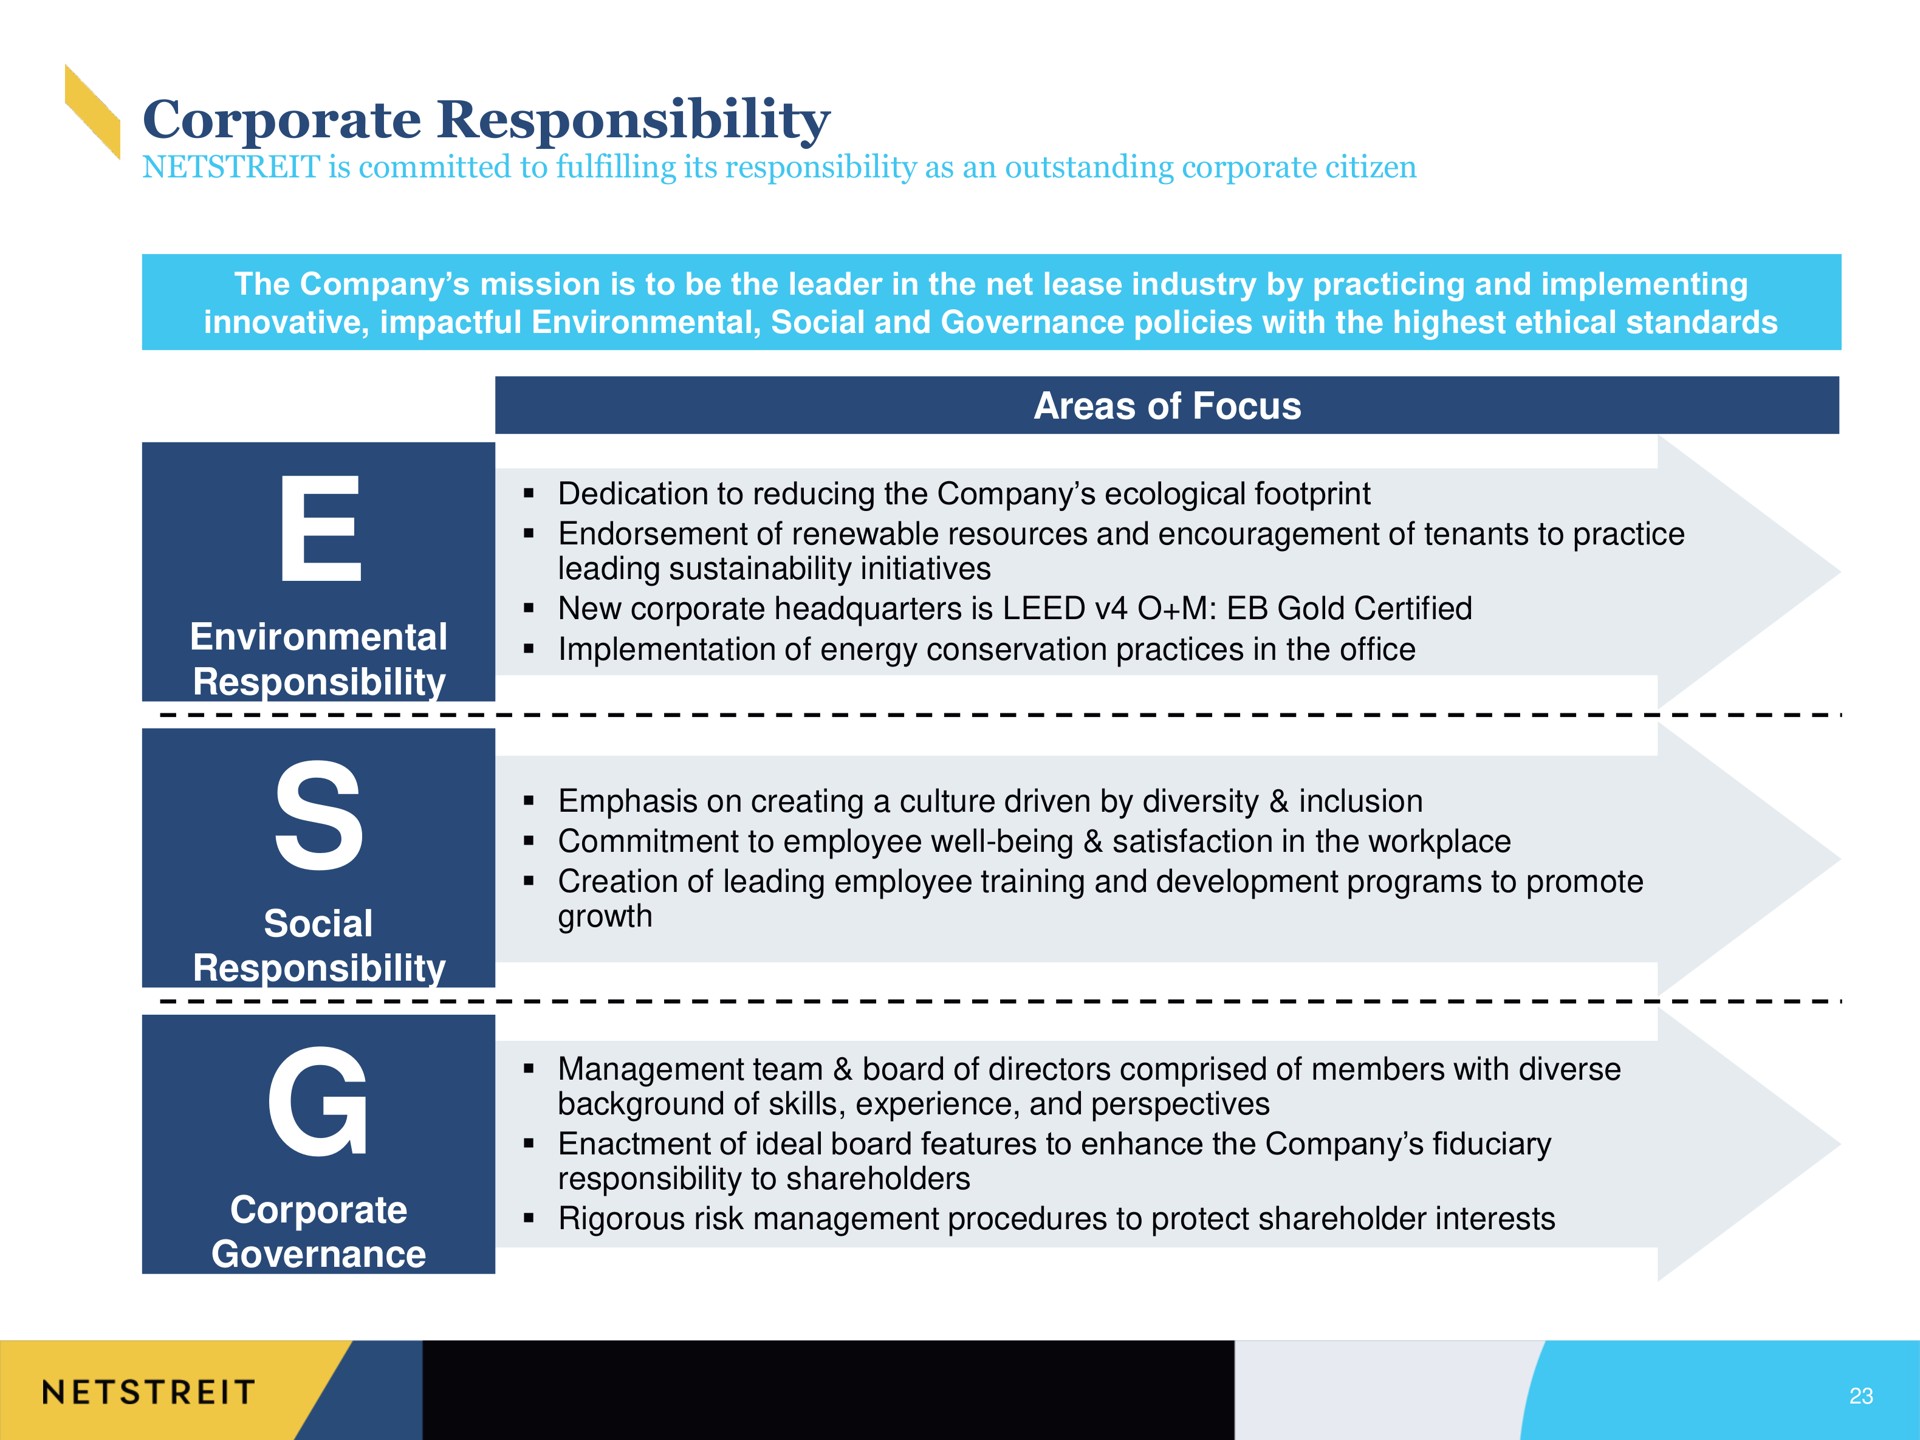 corporate responsibility environmental responsibility areas of focus social responsibility corporate governance | Netstreit